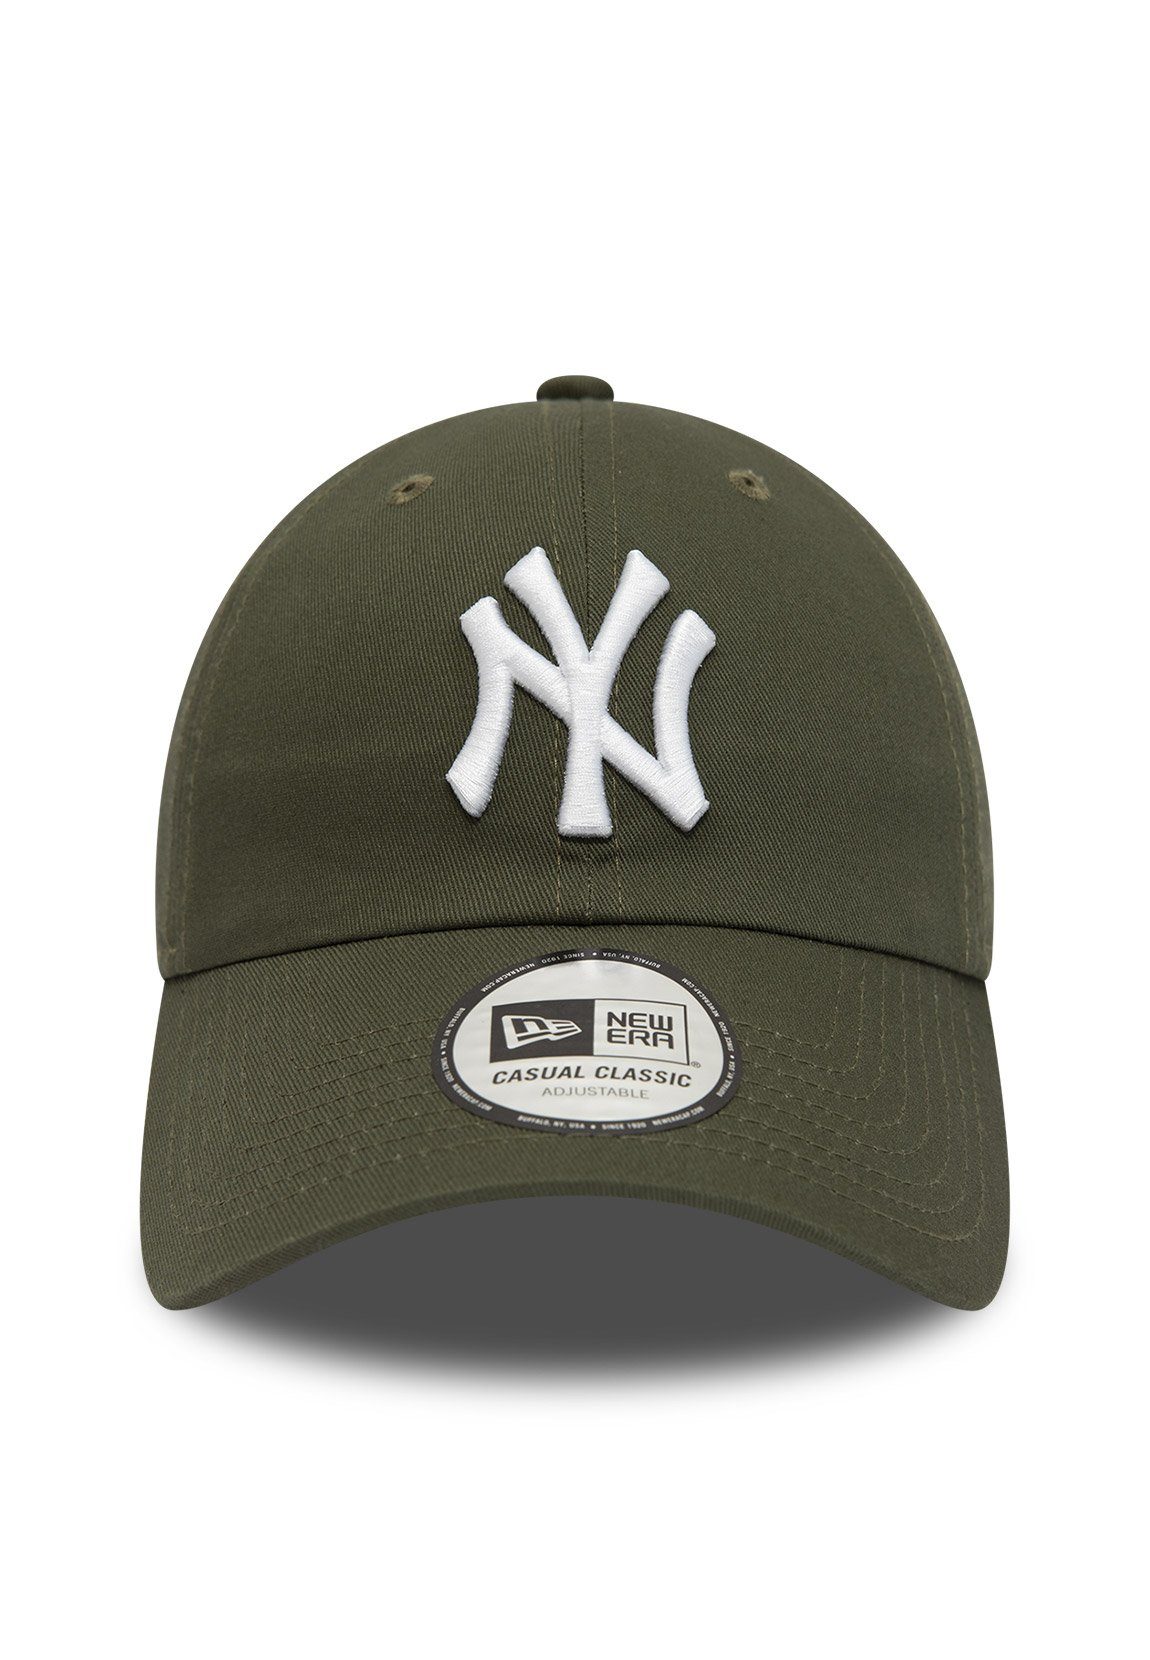 Cap Baseball 9Twenty Adjustable NY New Cap Era League YANKEES New Essential Era